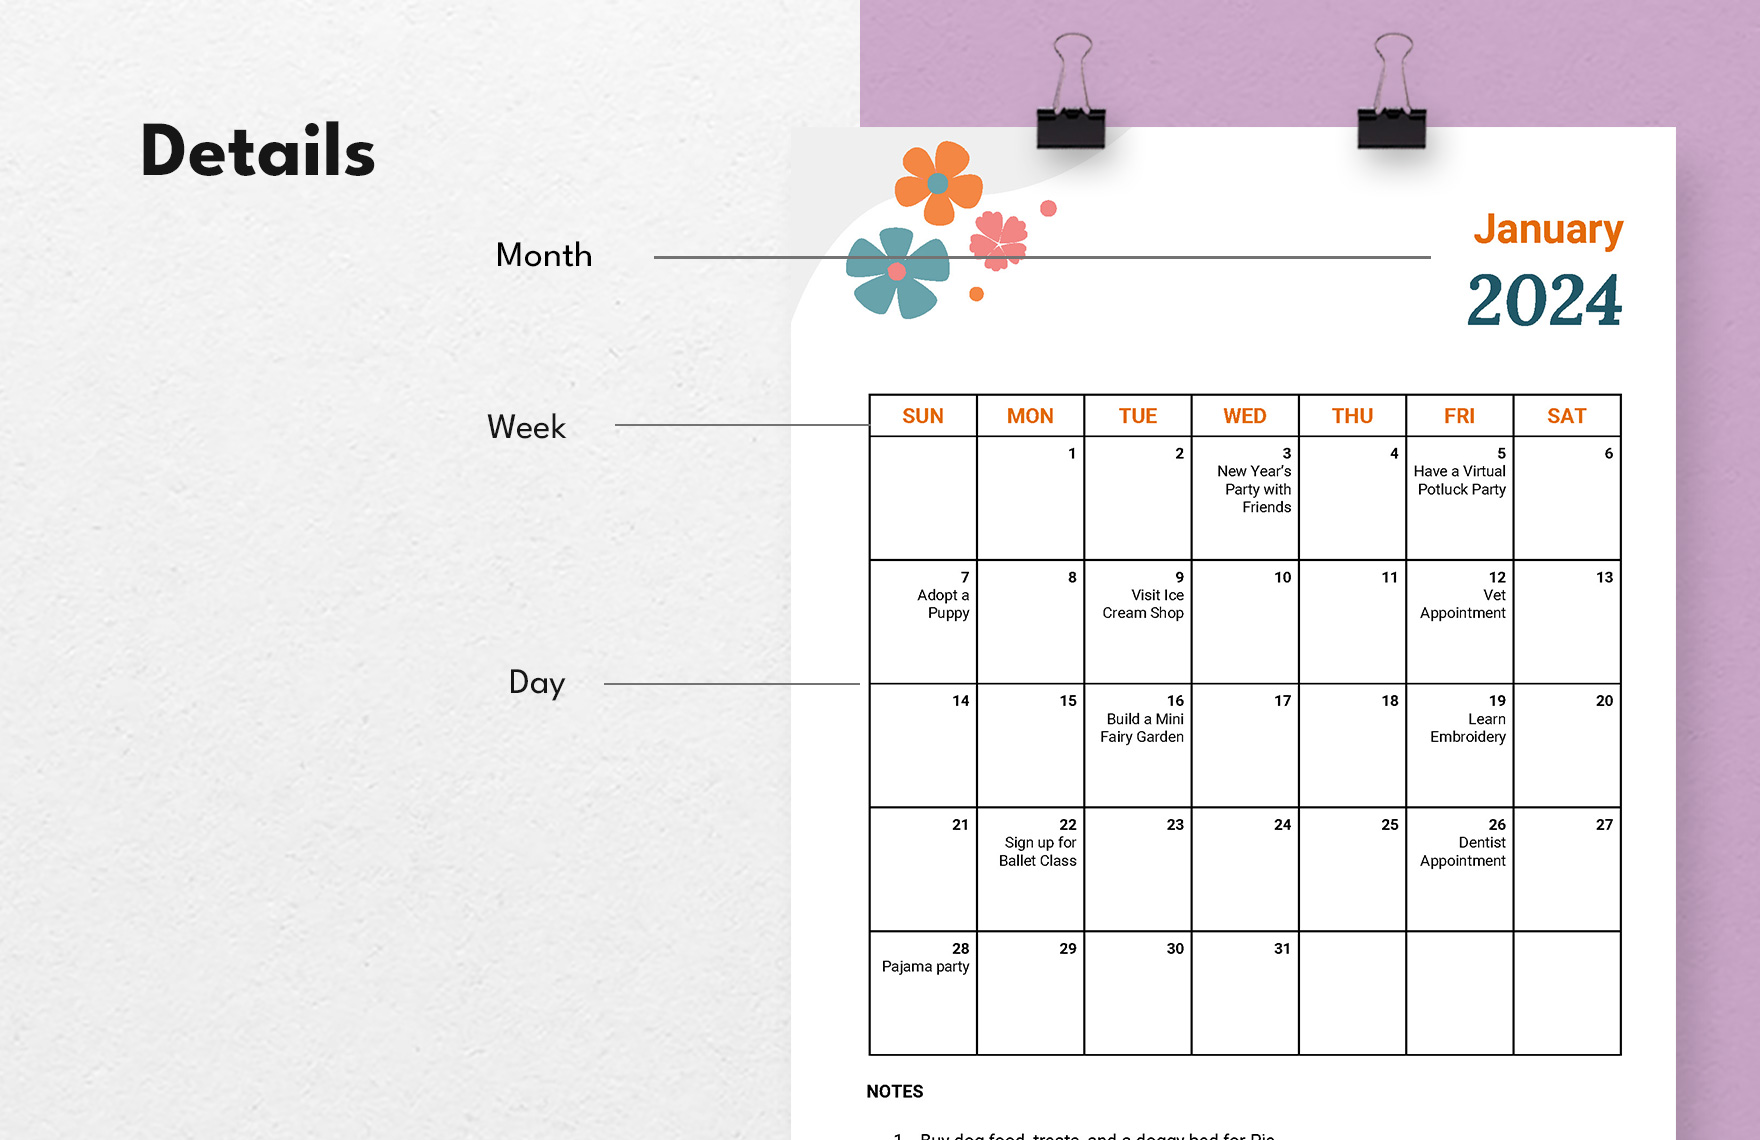 Cute Calendar Design Template